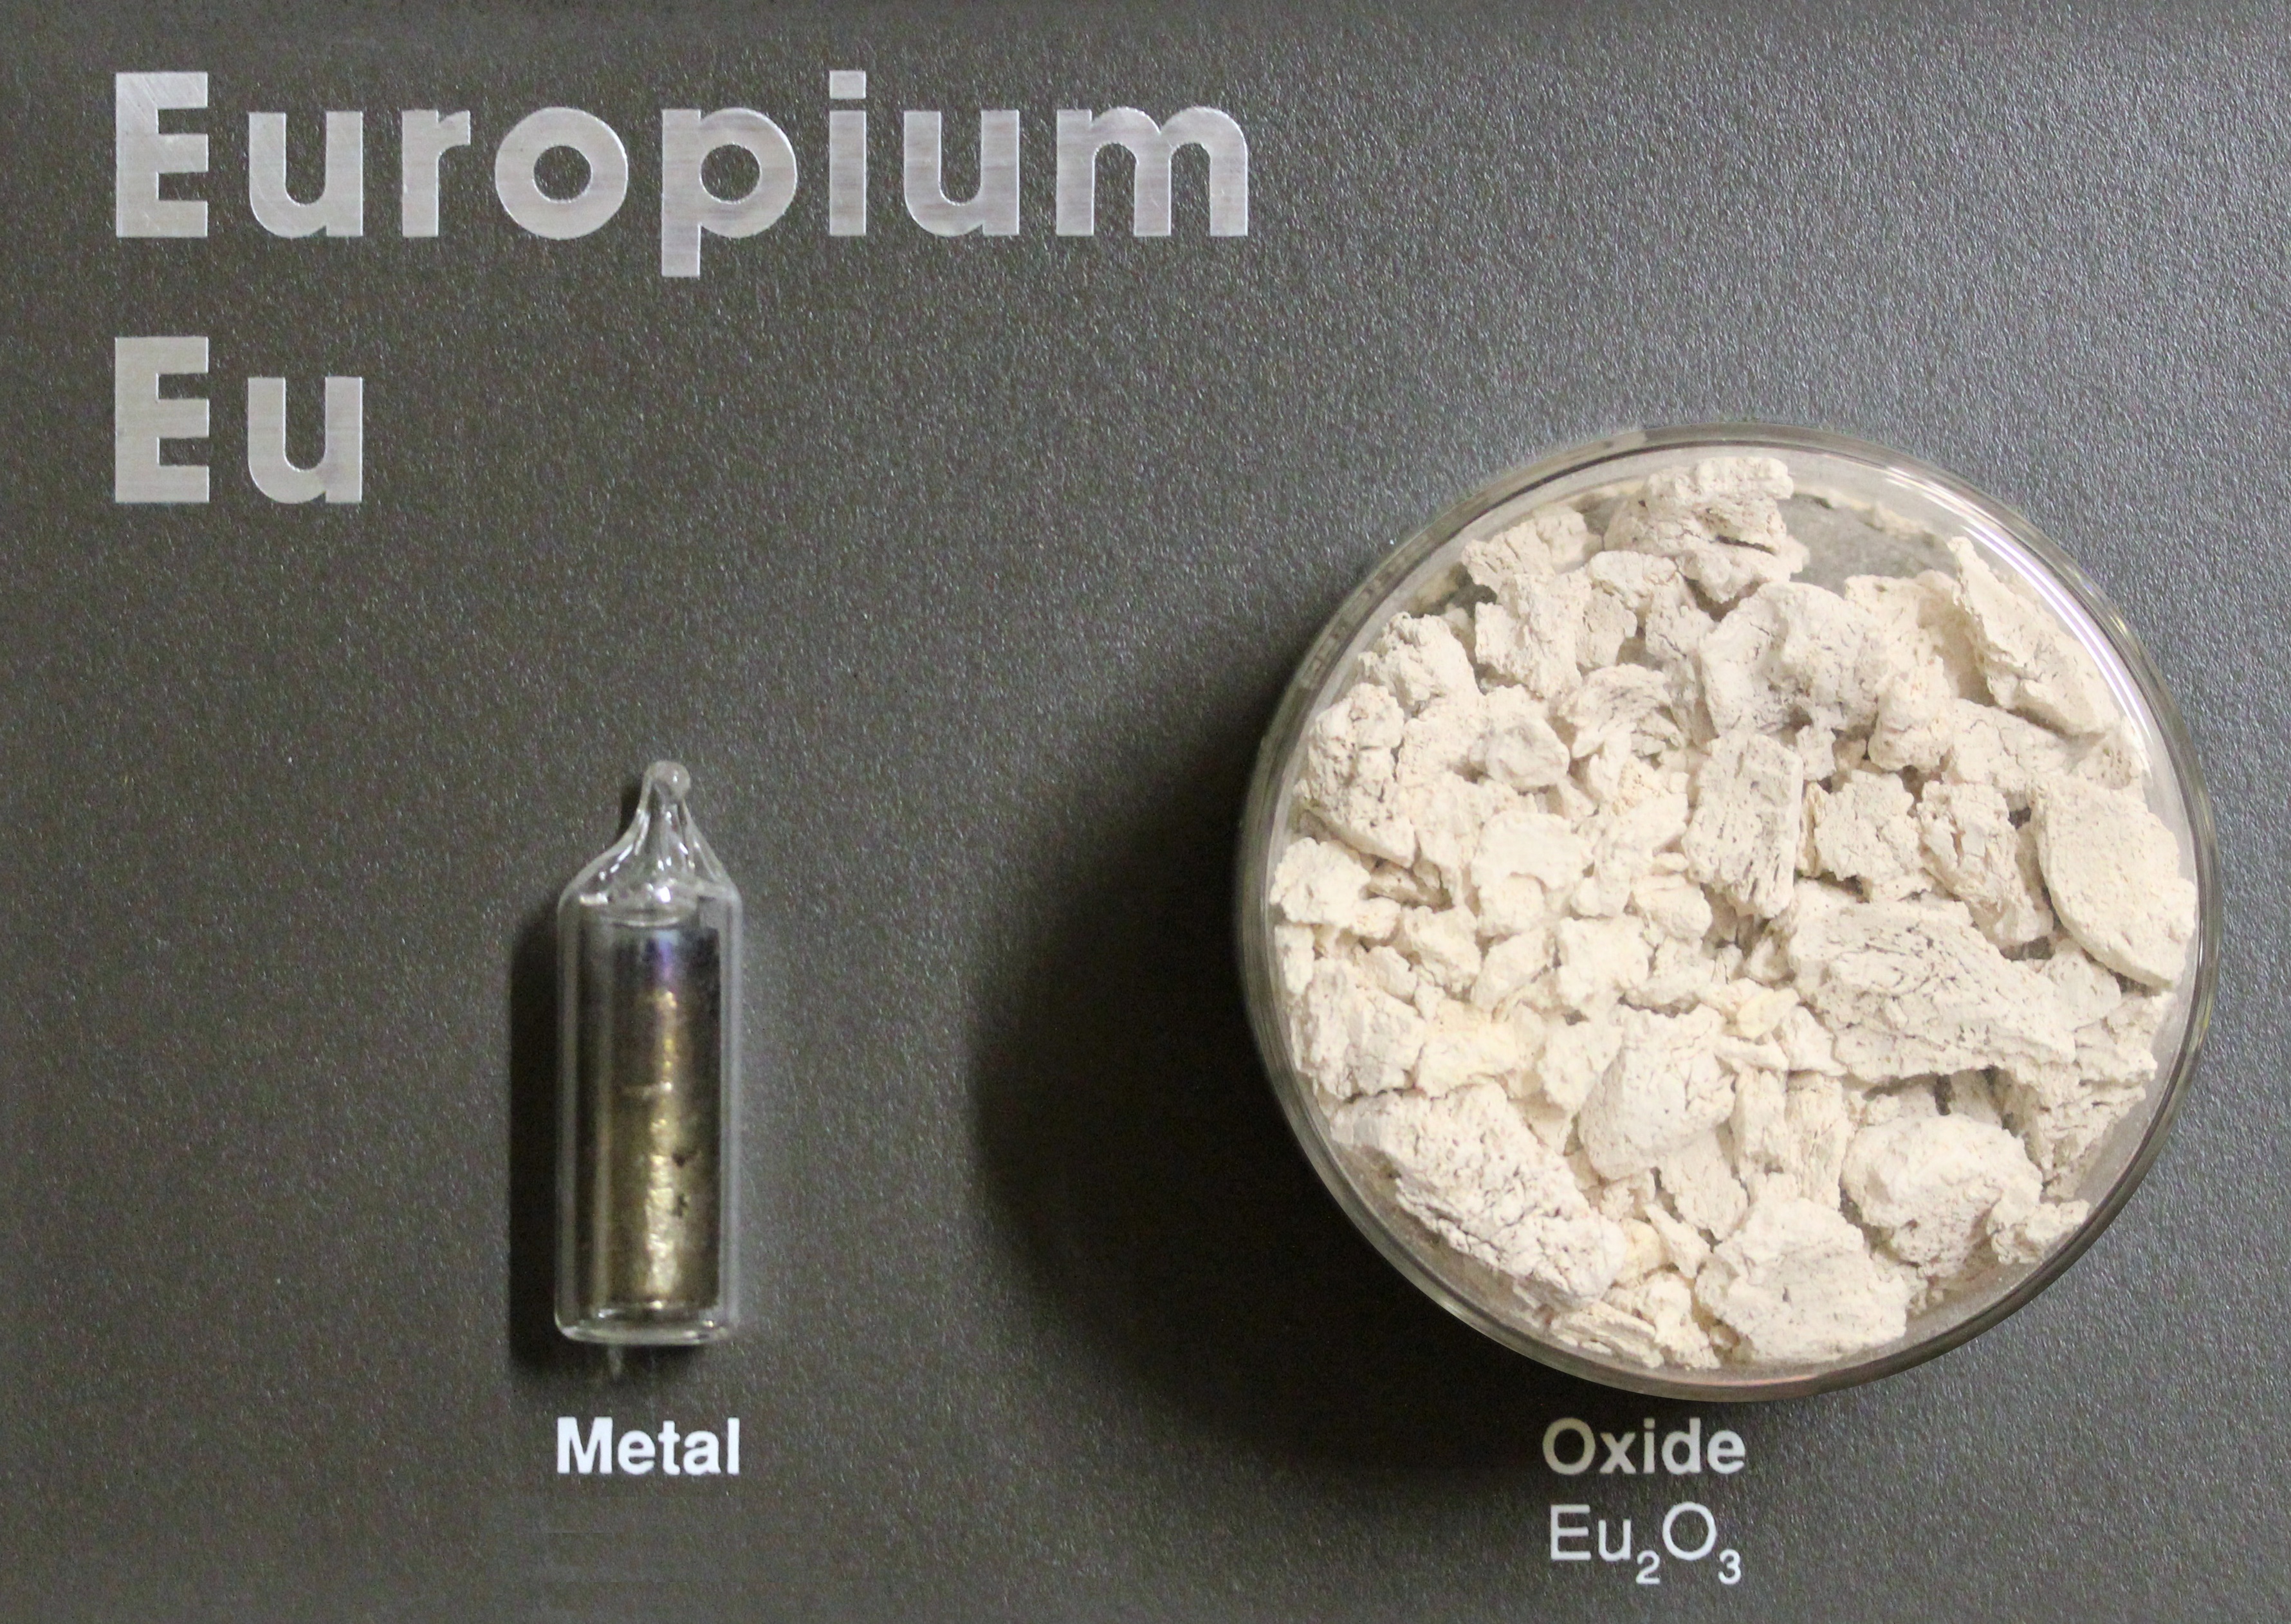 Europium metal and oxide